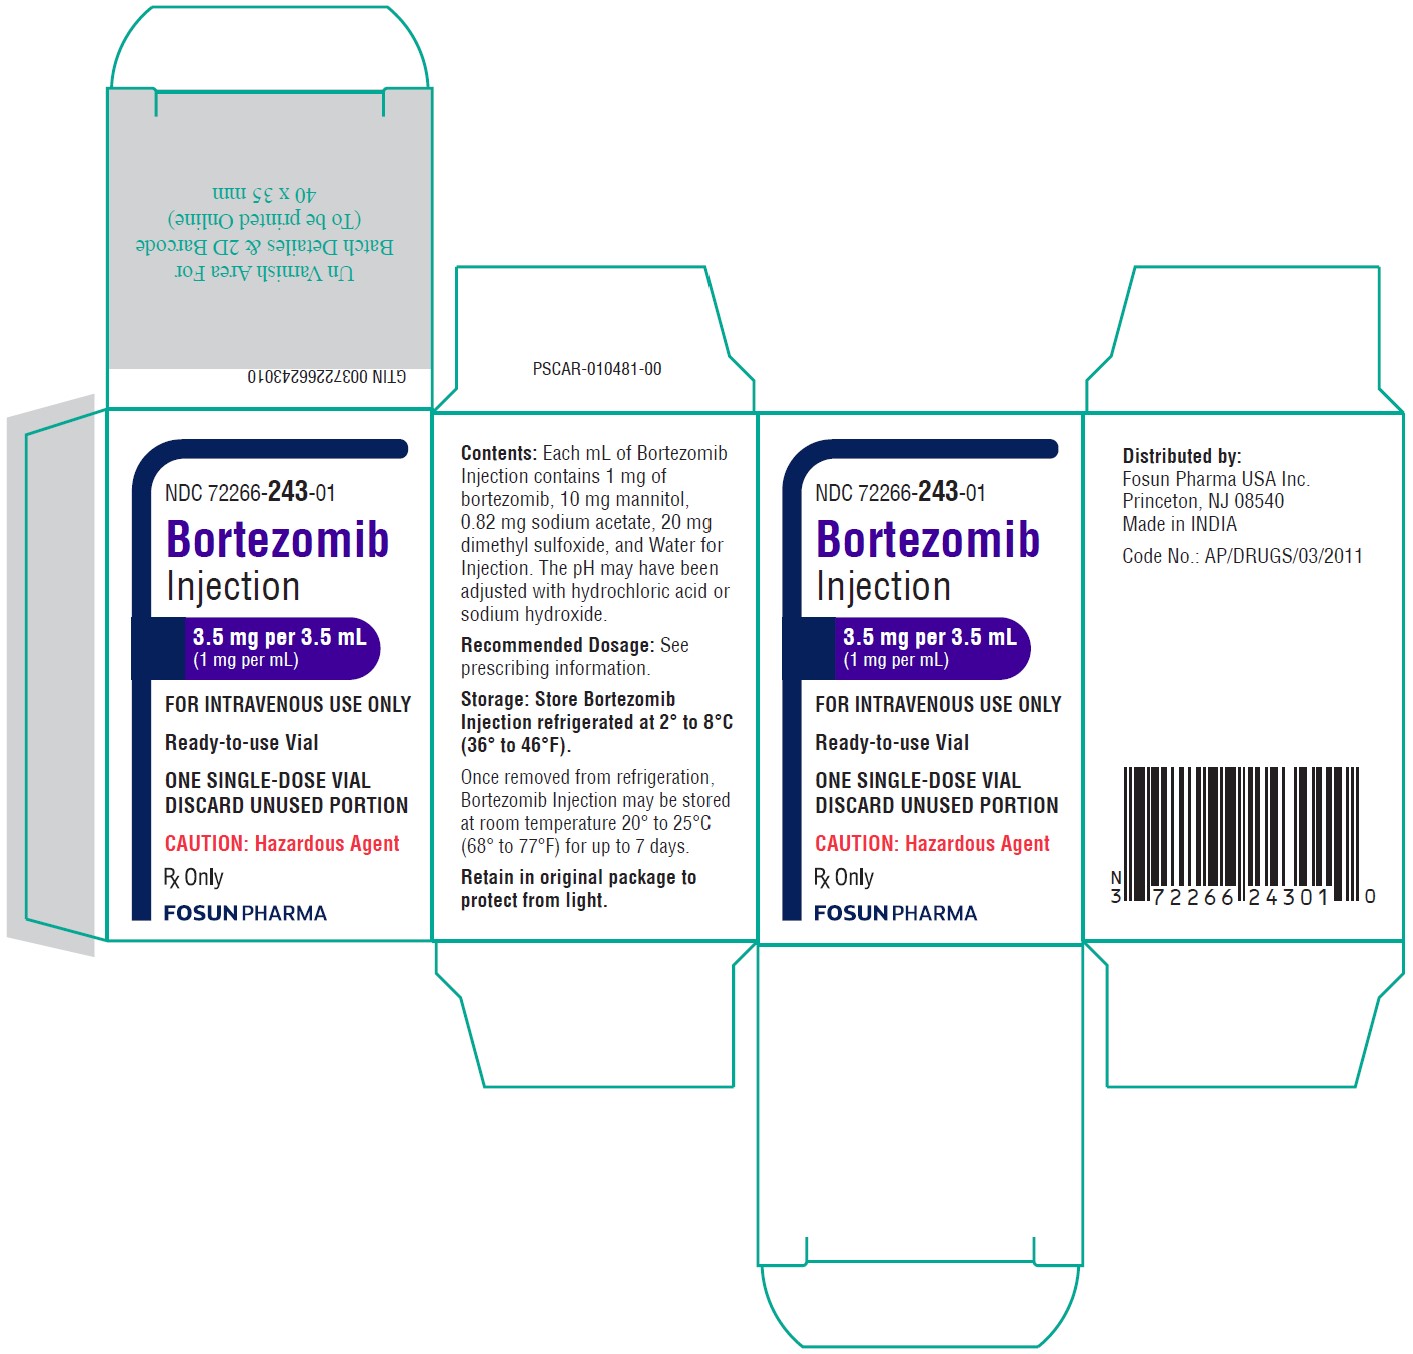 Carton Label 1 mg